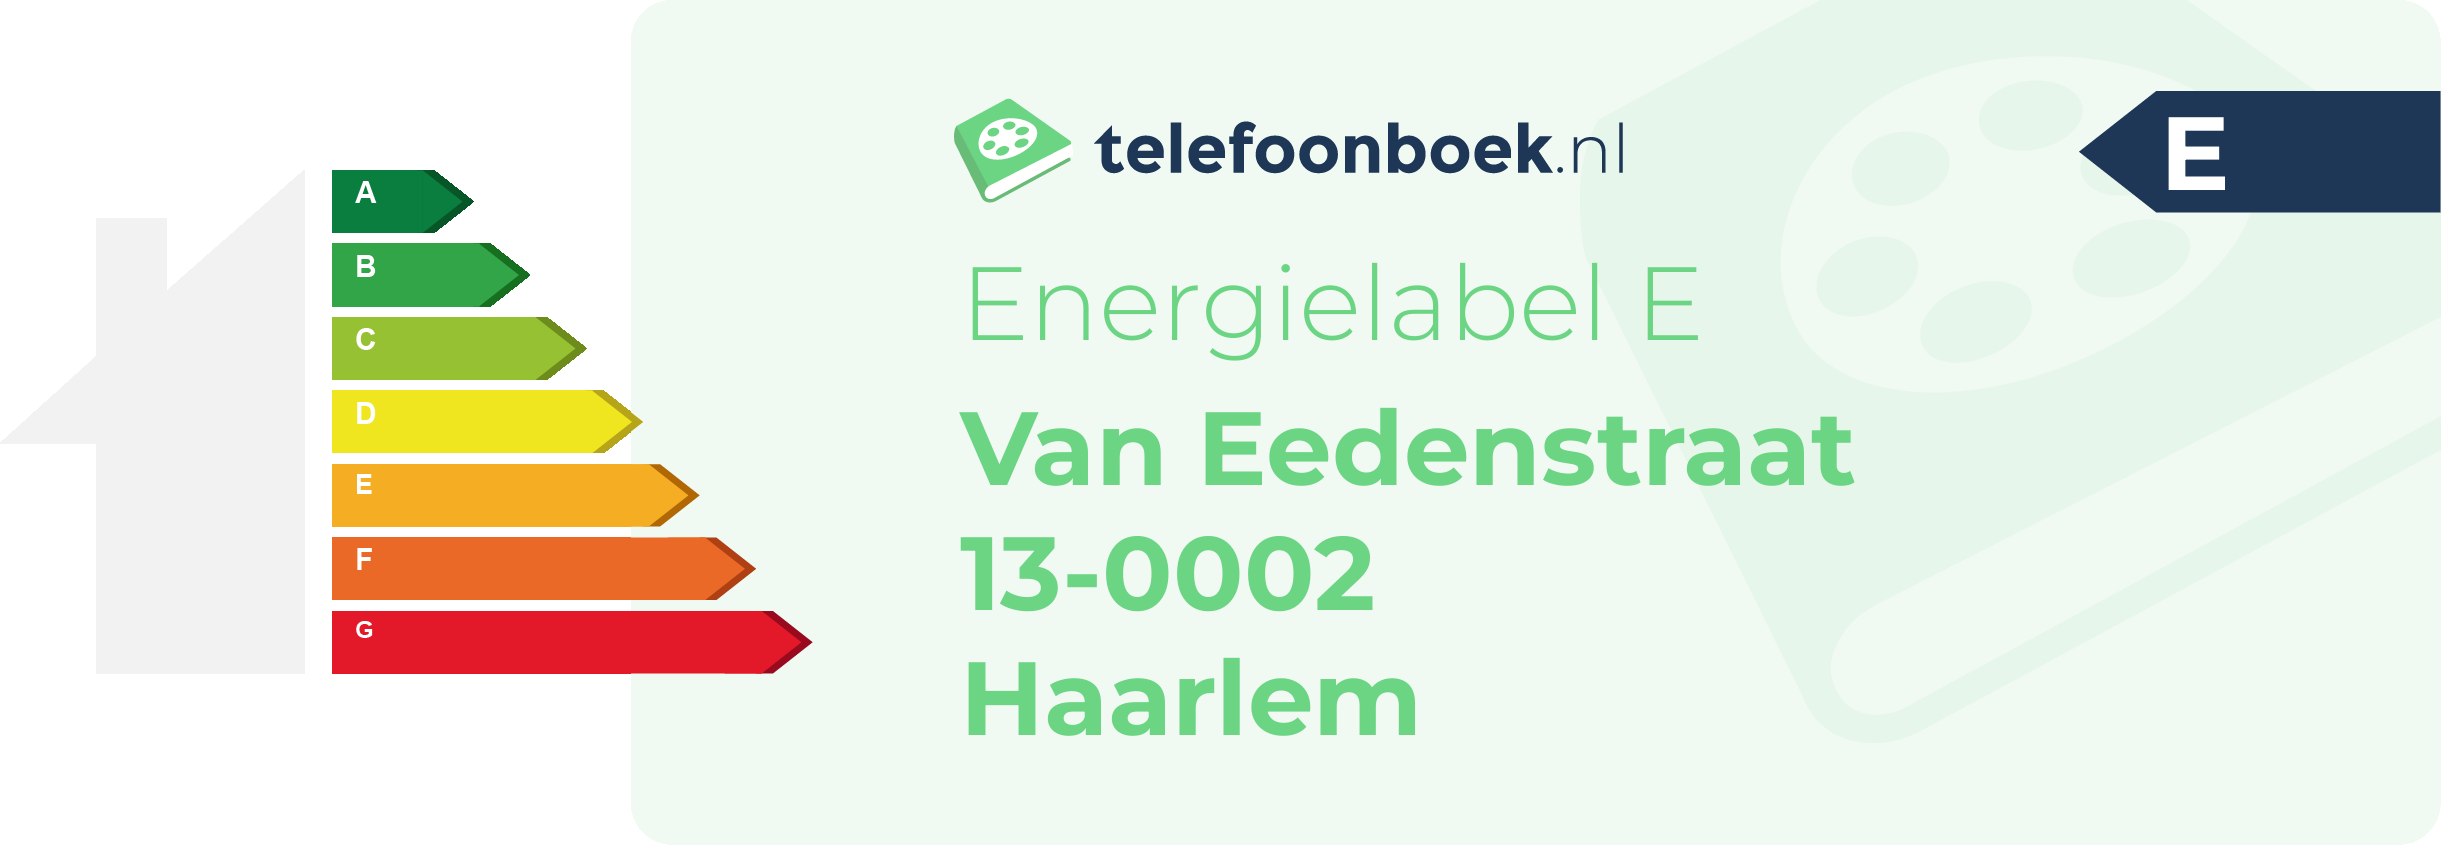 Energielabel Van Eedenstraat 13-0002 Haarlem